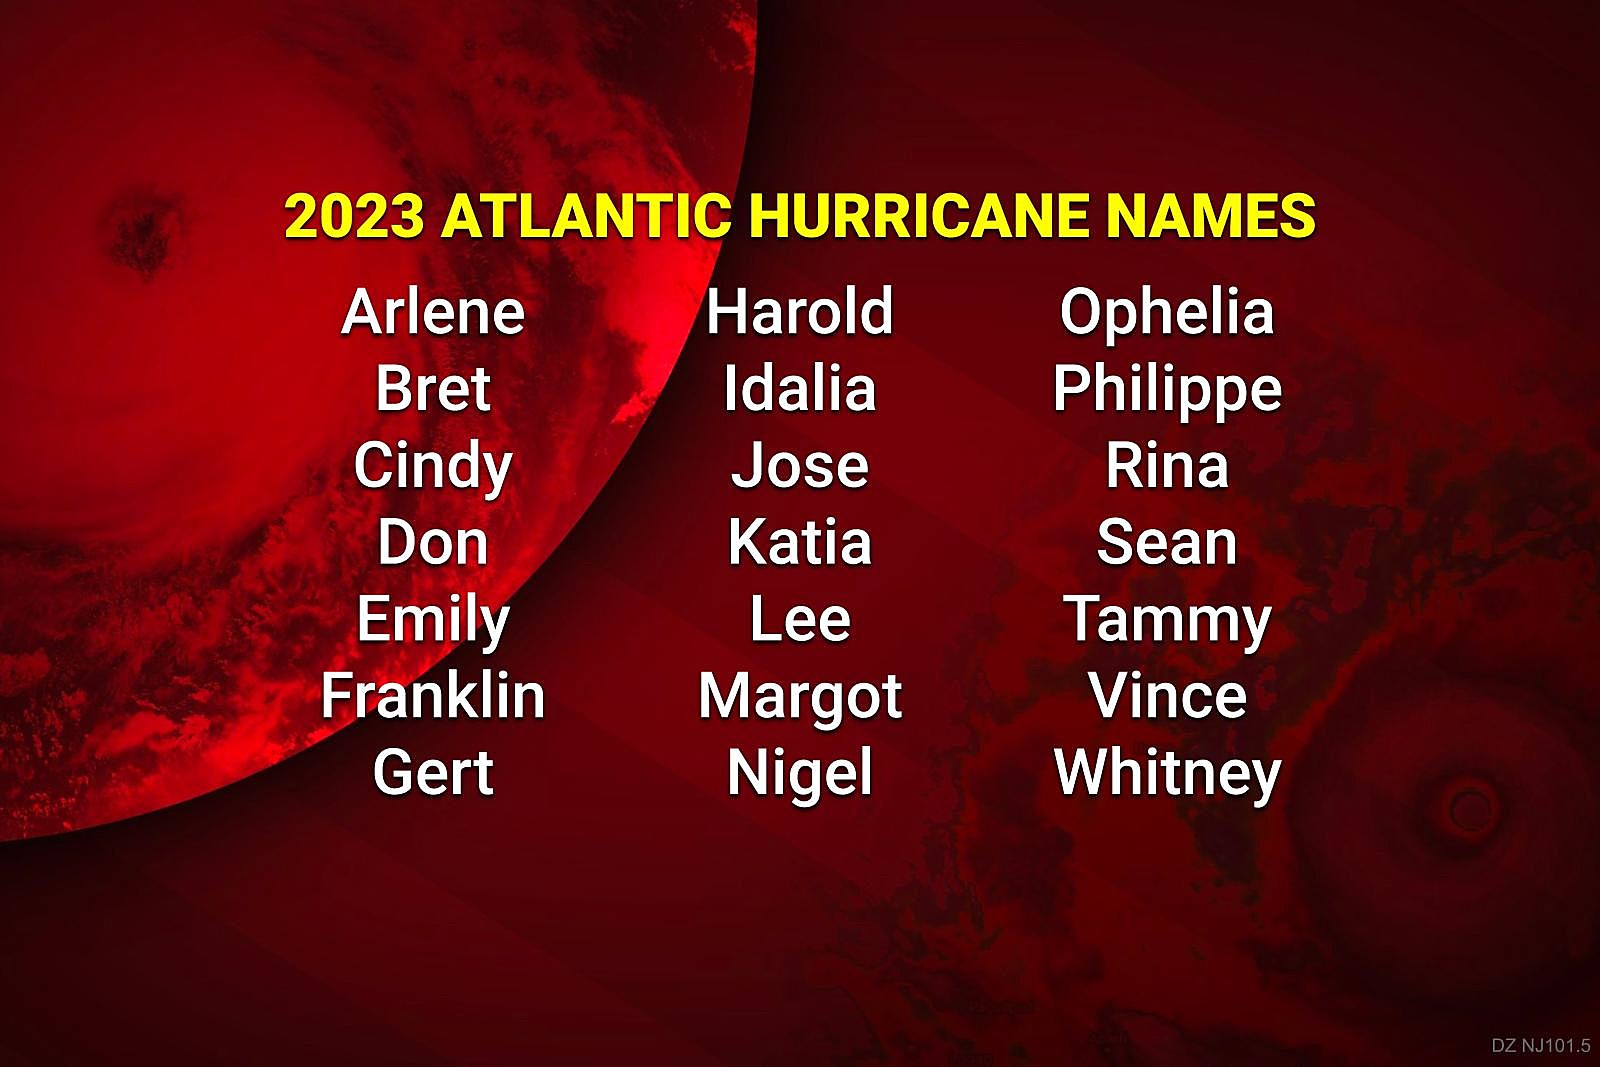 2023 hurricane season preview for NJ Names, numbers, and El Niño